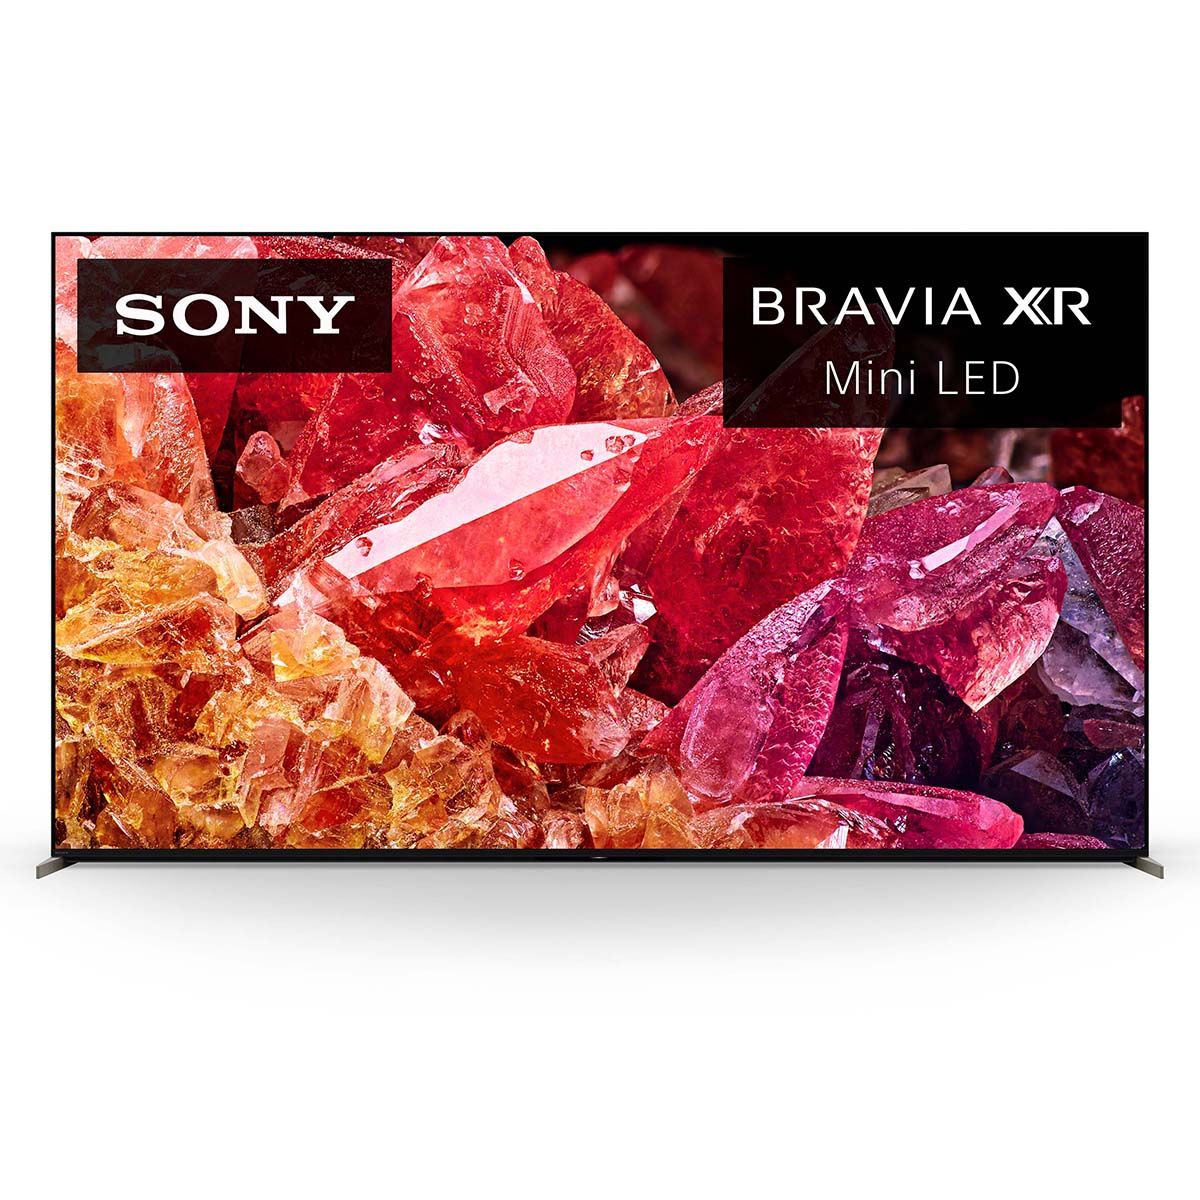 Sony BRAVIA XR X95K 4K LED TV, front view